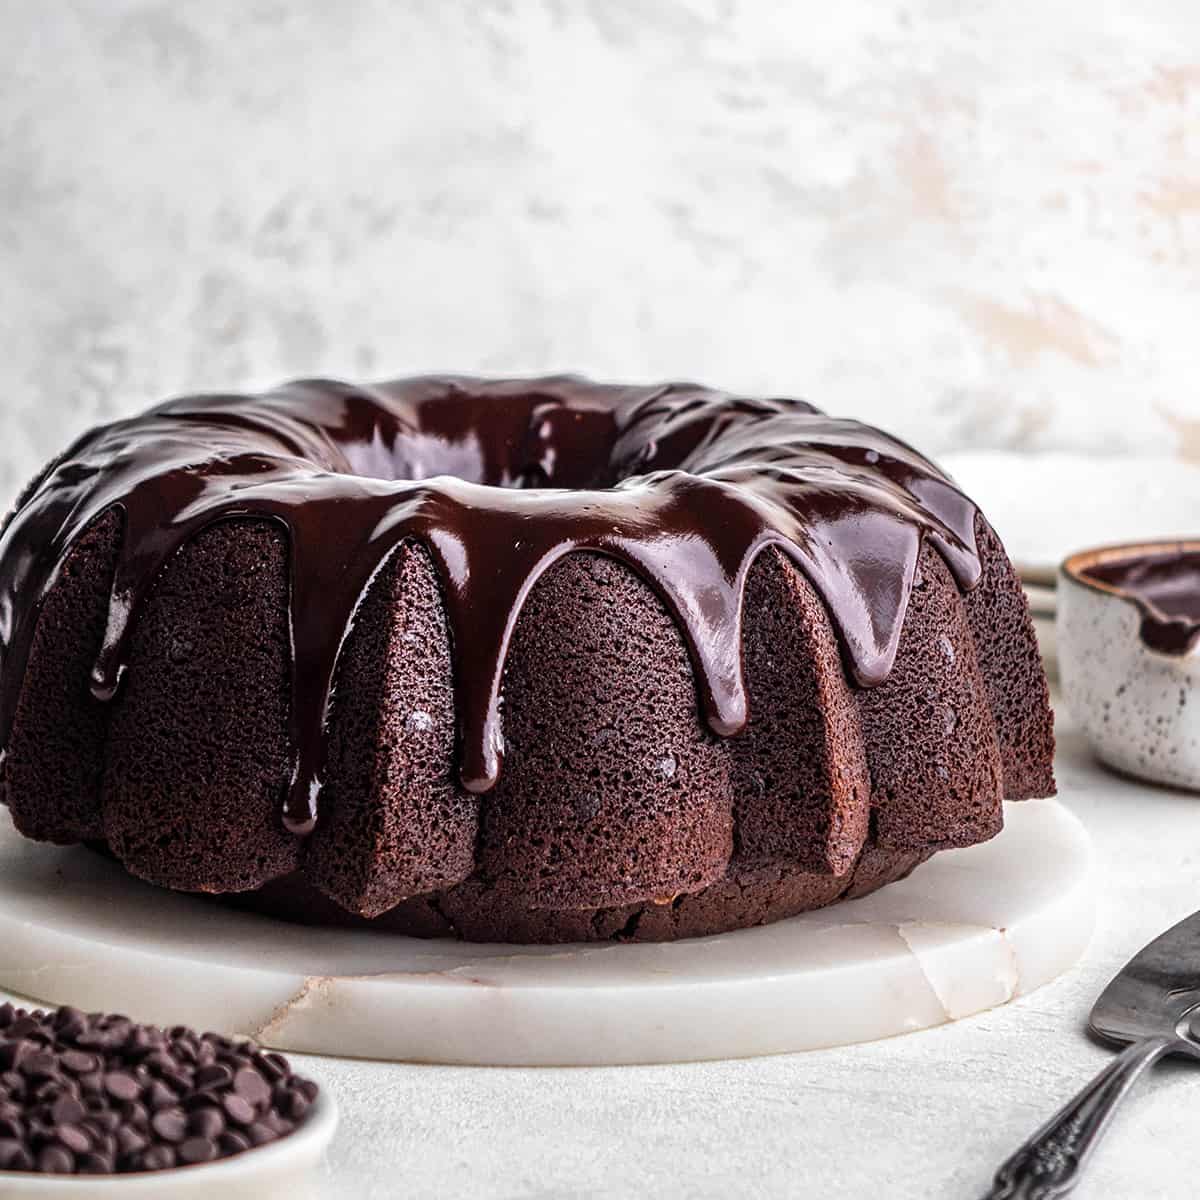 Chocolate Bundt Cake with chocolate glaze on a cake plate